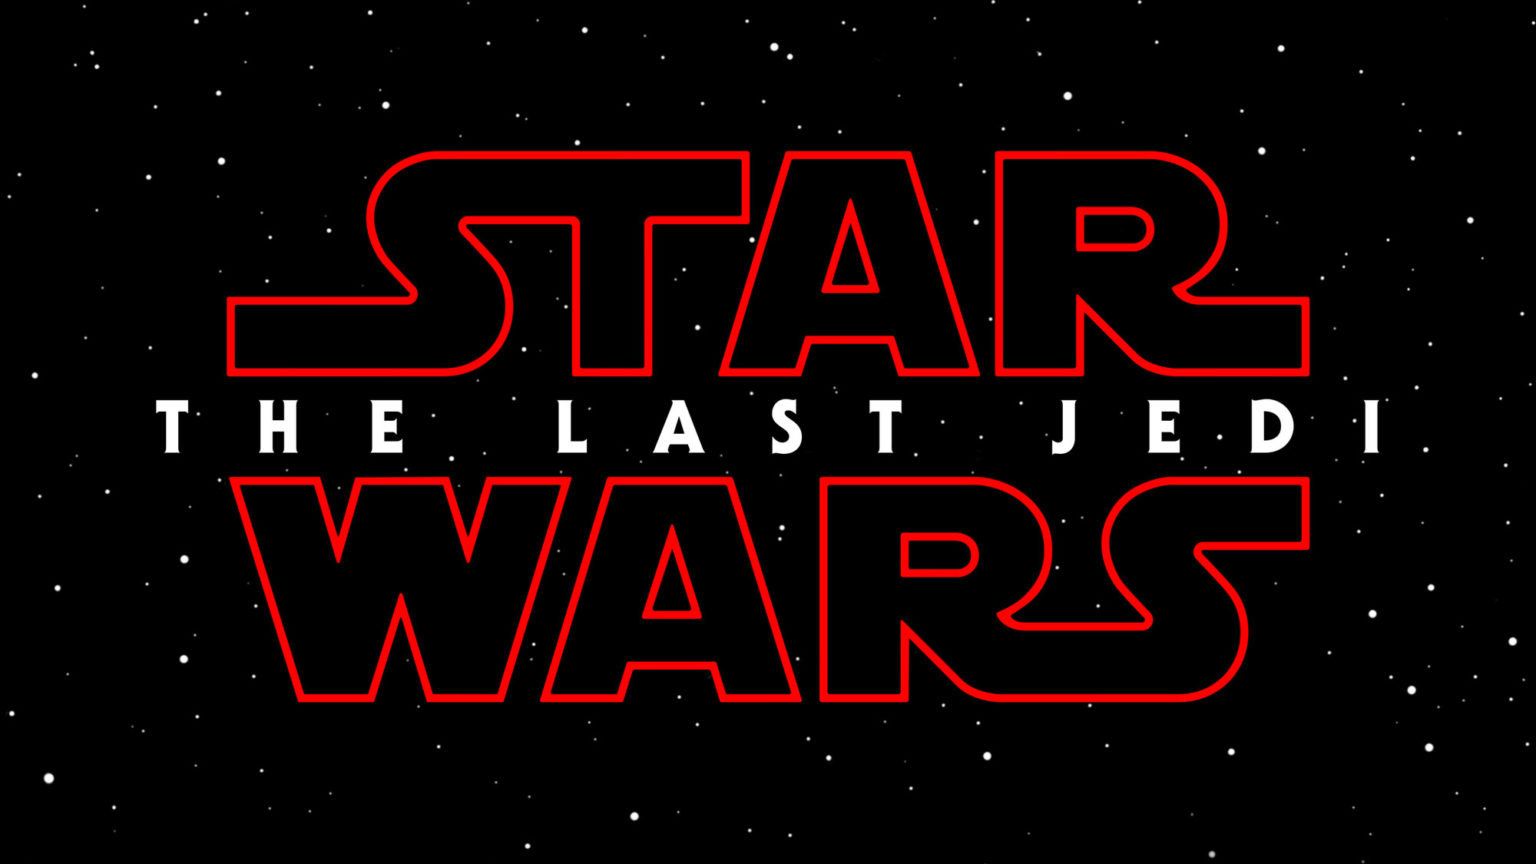 Star Wars Episode 8: The Last Jedi logo